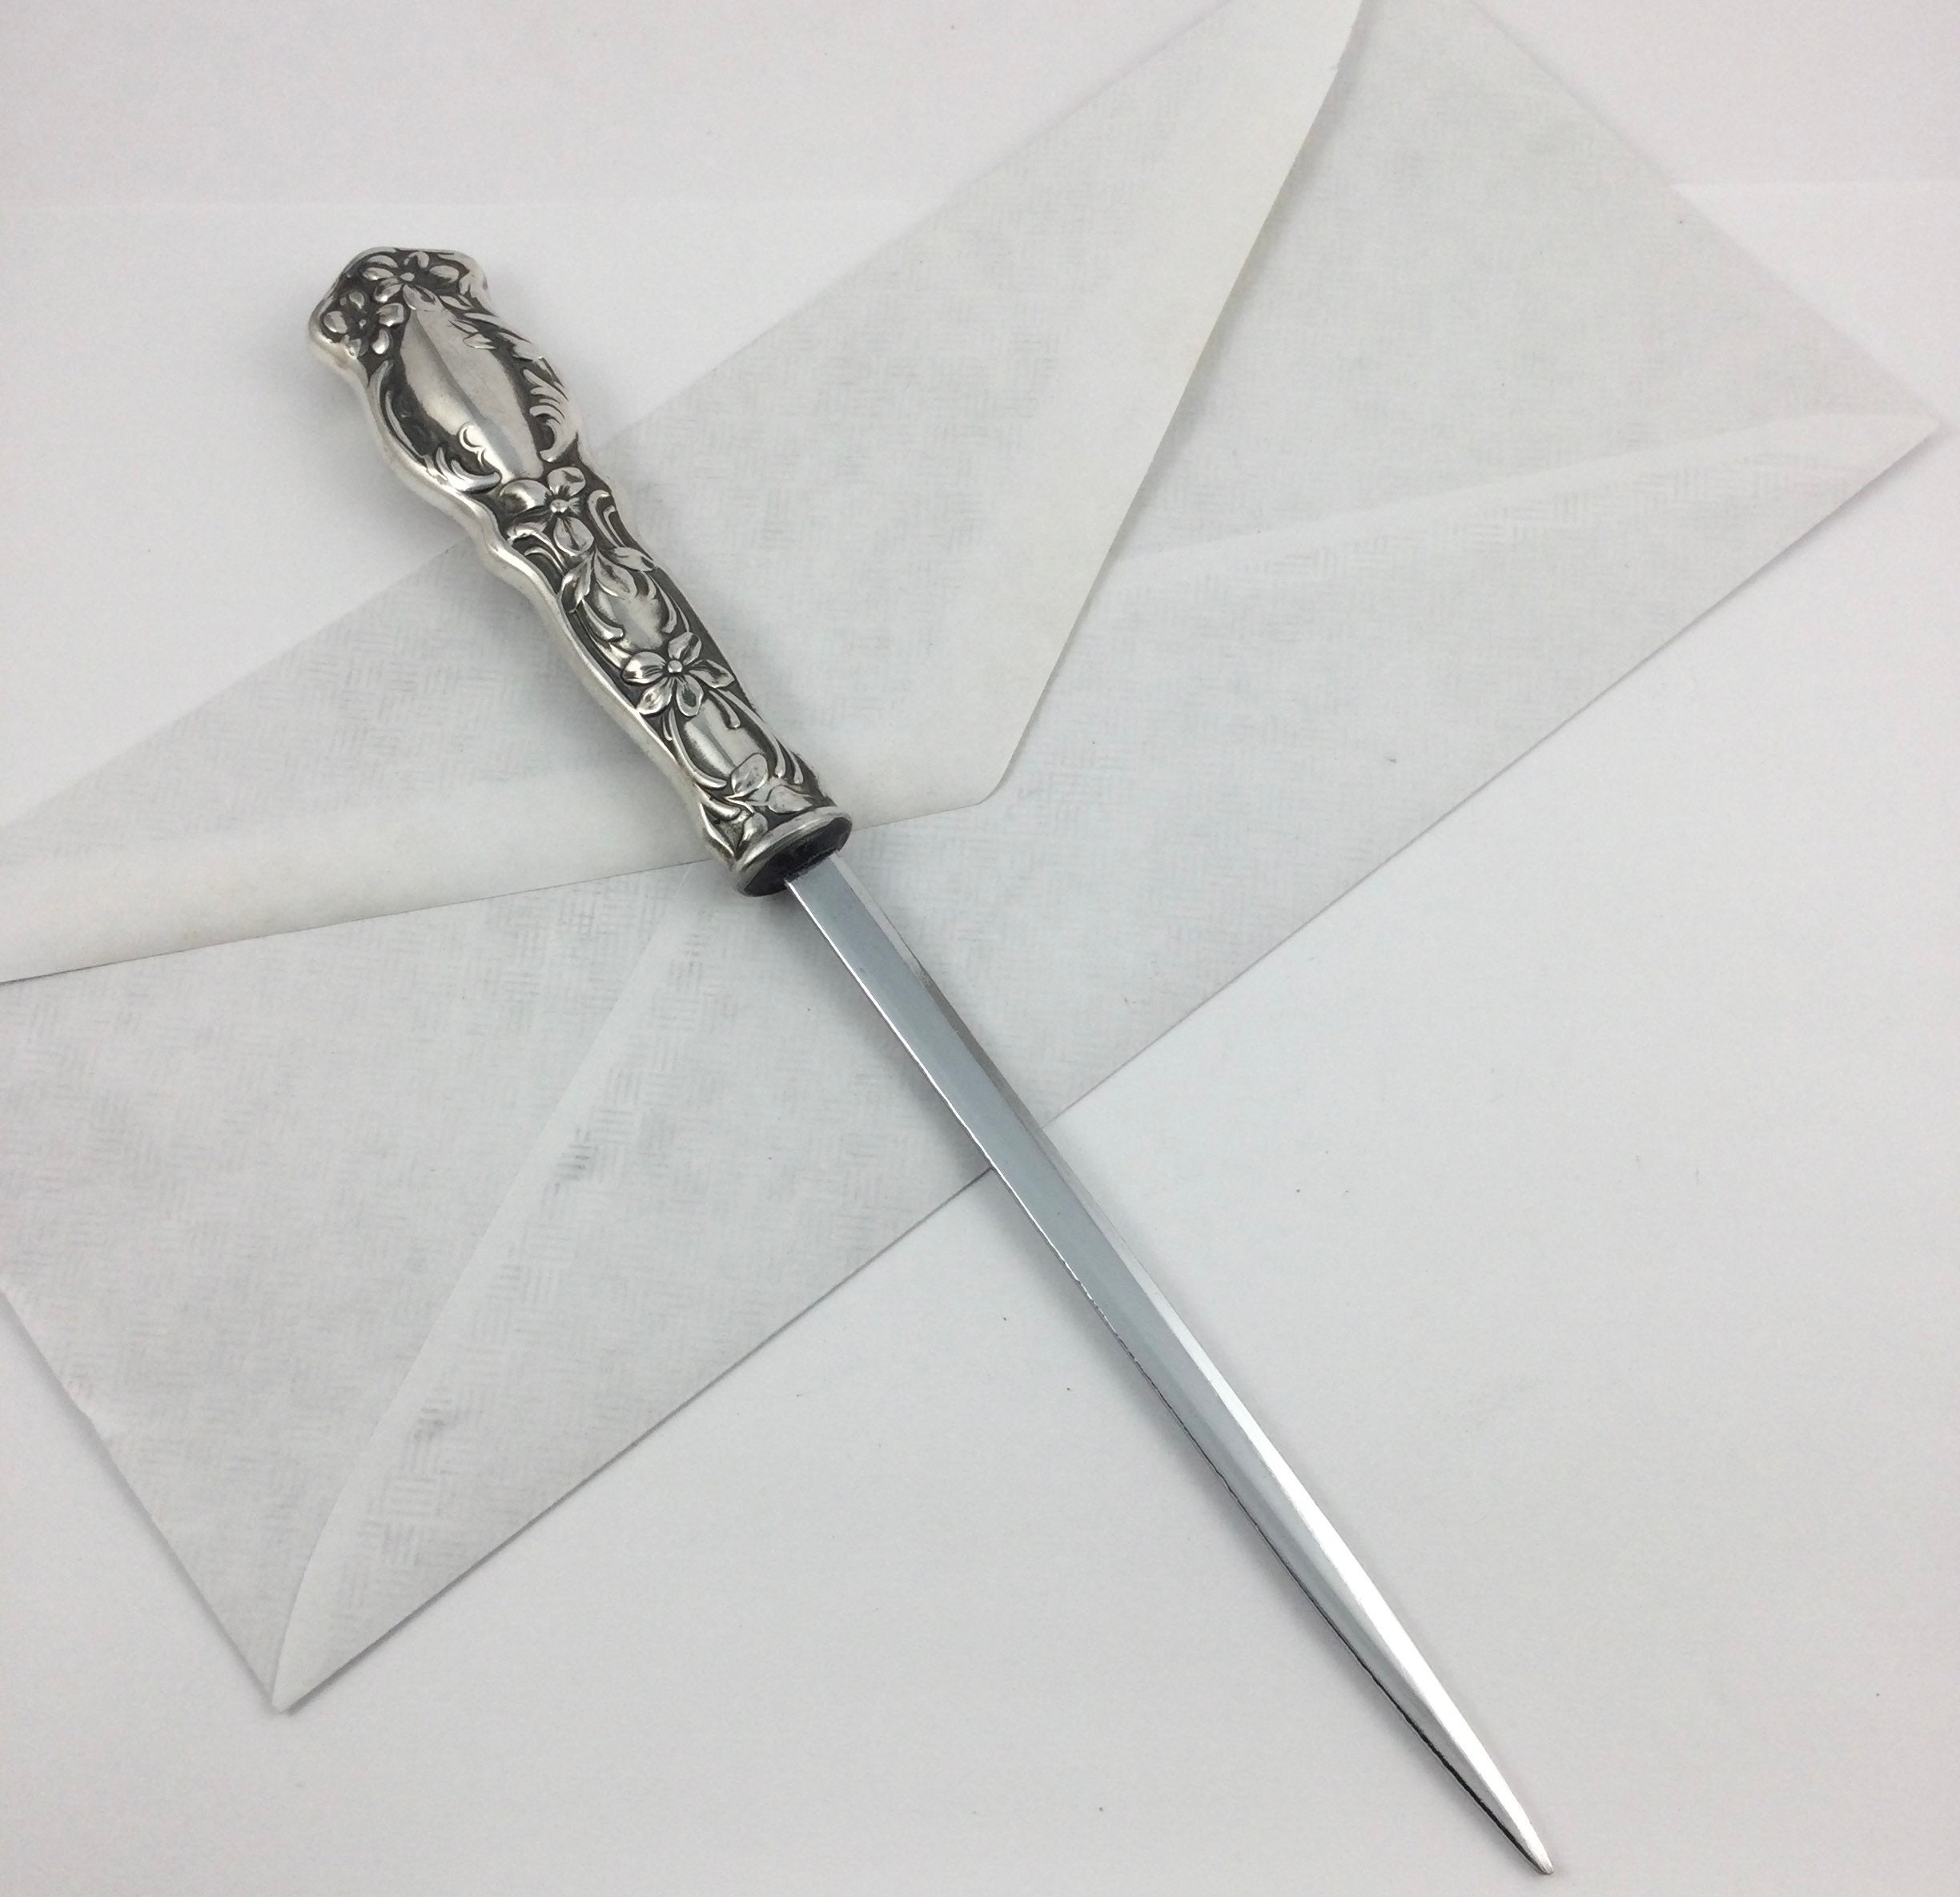 Letter opener, large flower, in pewter and stainless steel, elegant gift.